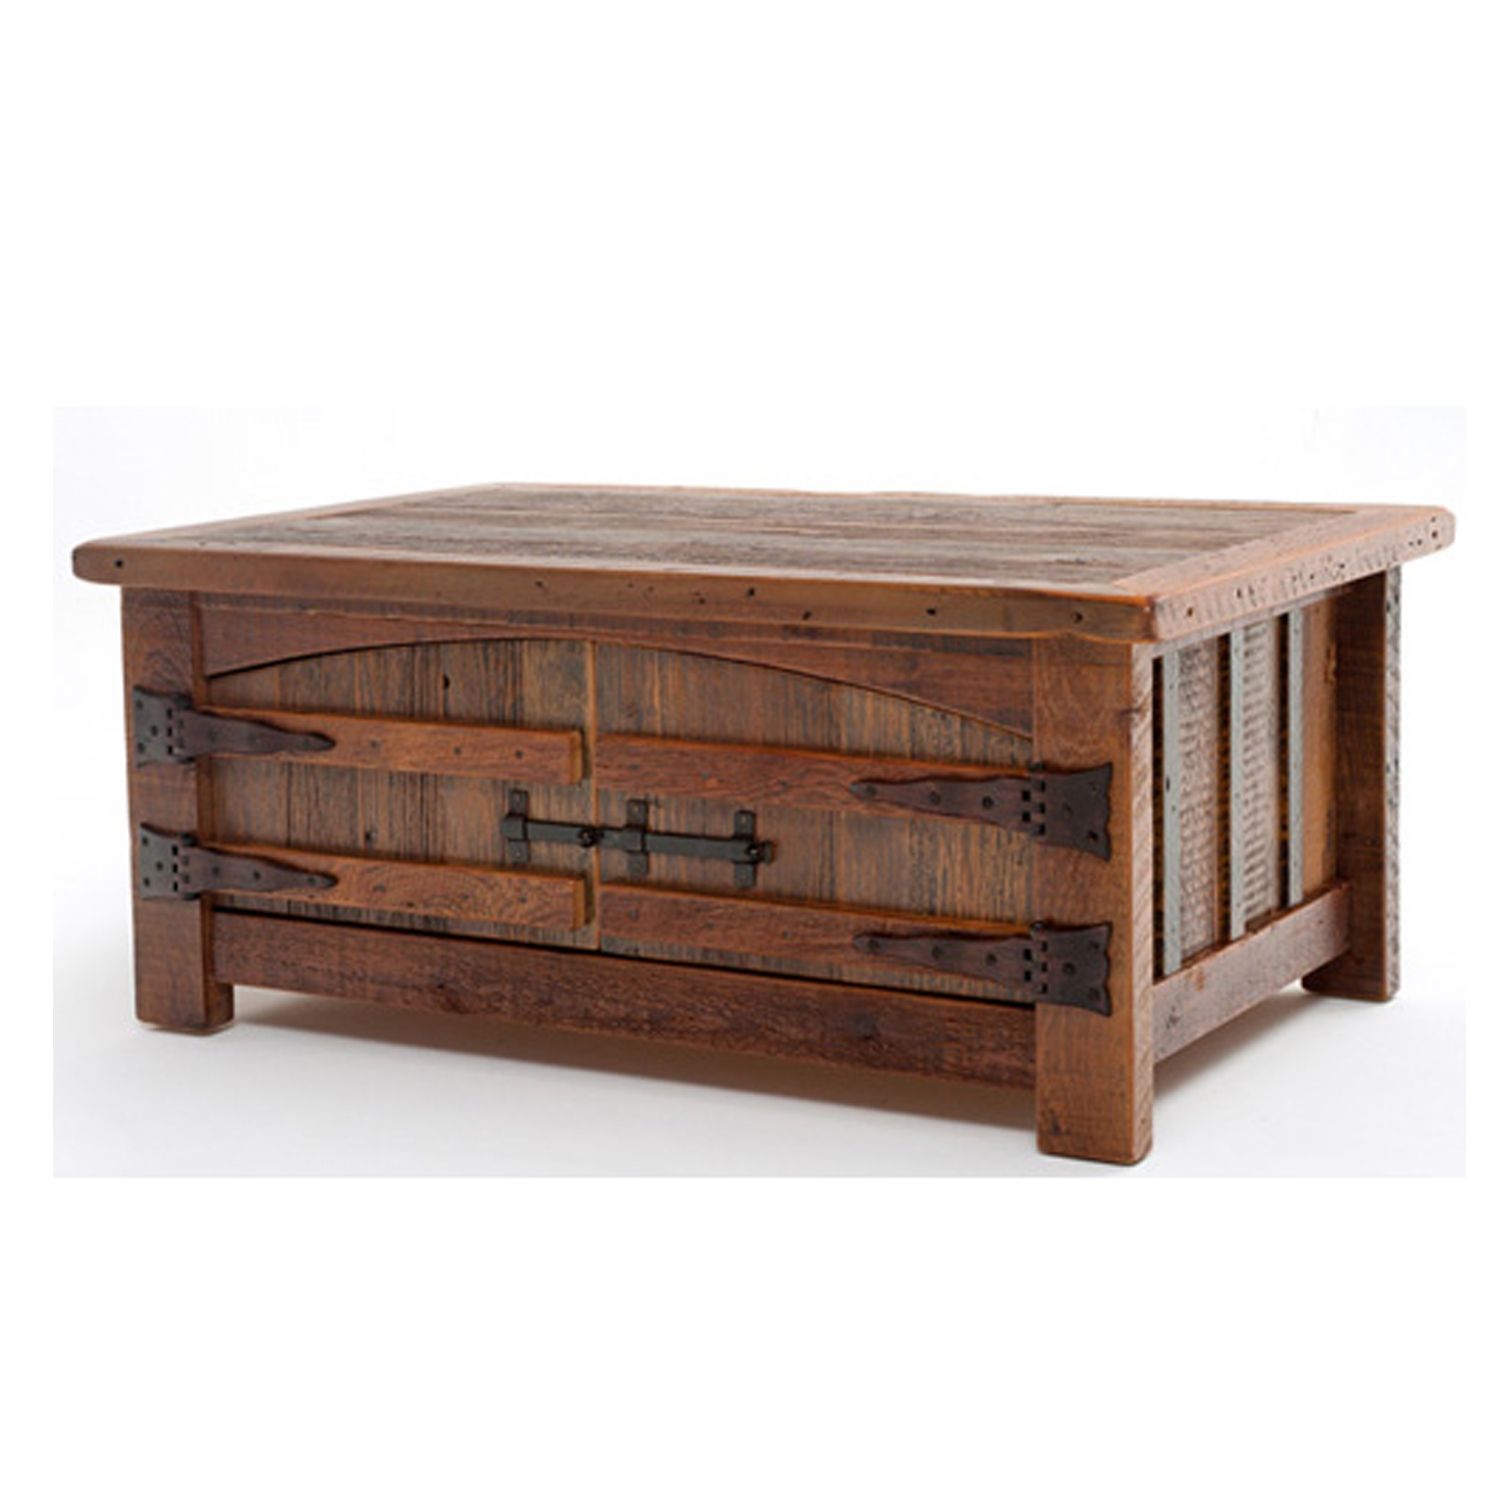 Rustic Reclaimed Wood Coffee Table Storage Trunk